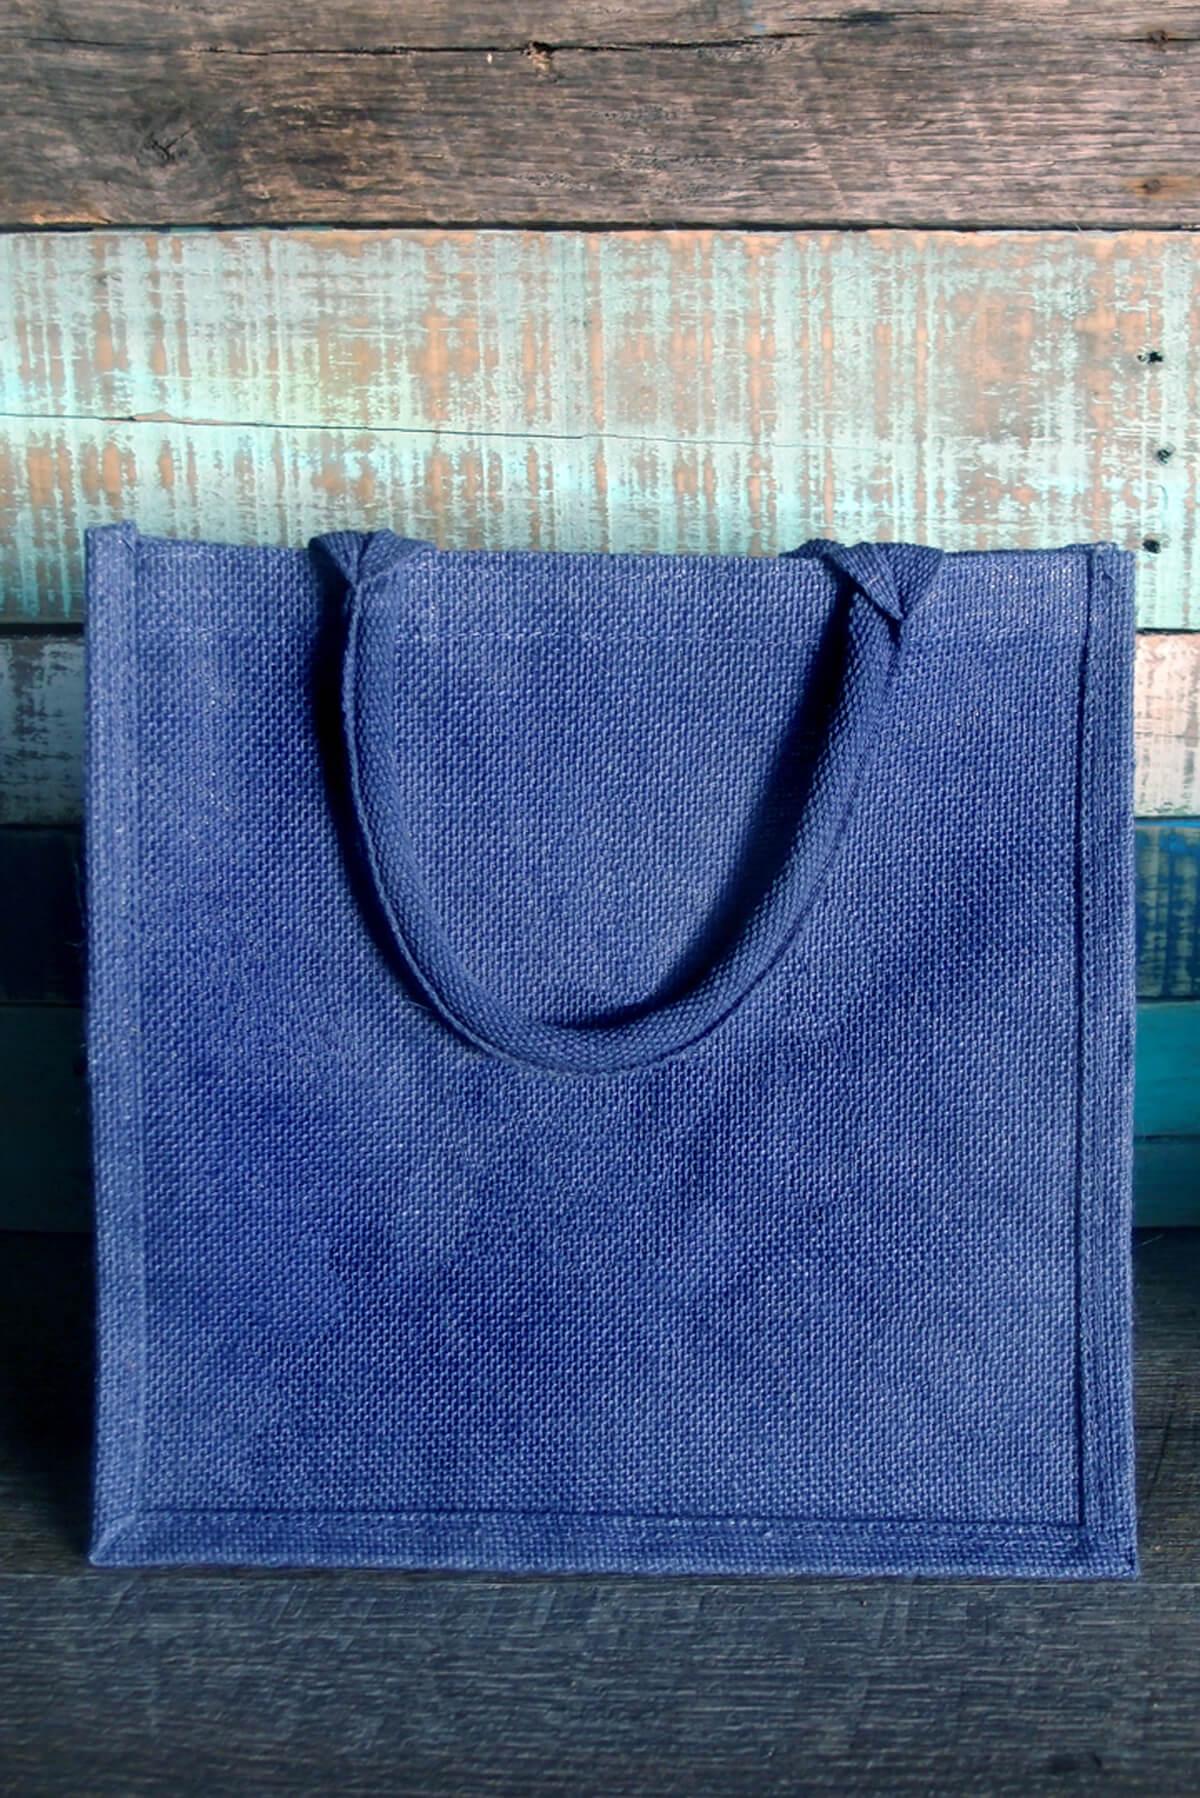 Download Blue Burlap 12x12 Euro Tote Bag - Save-On-Crafts